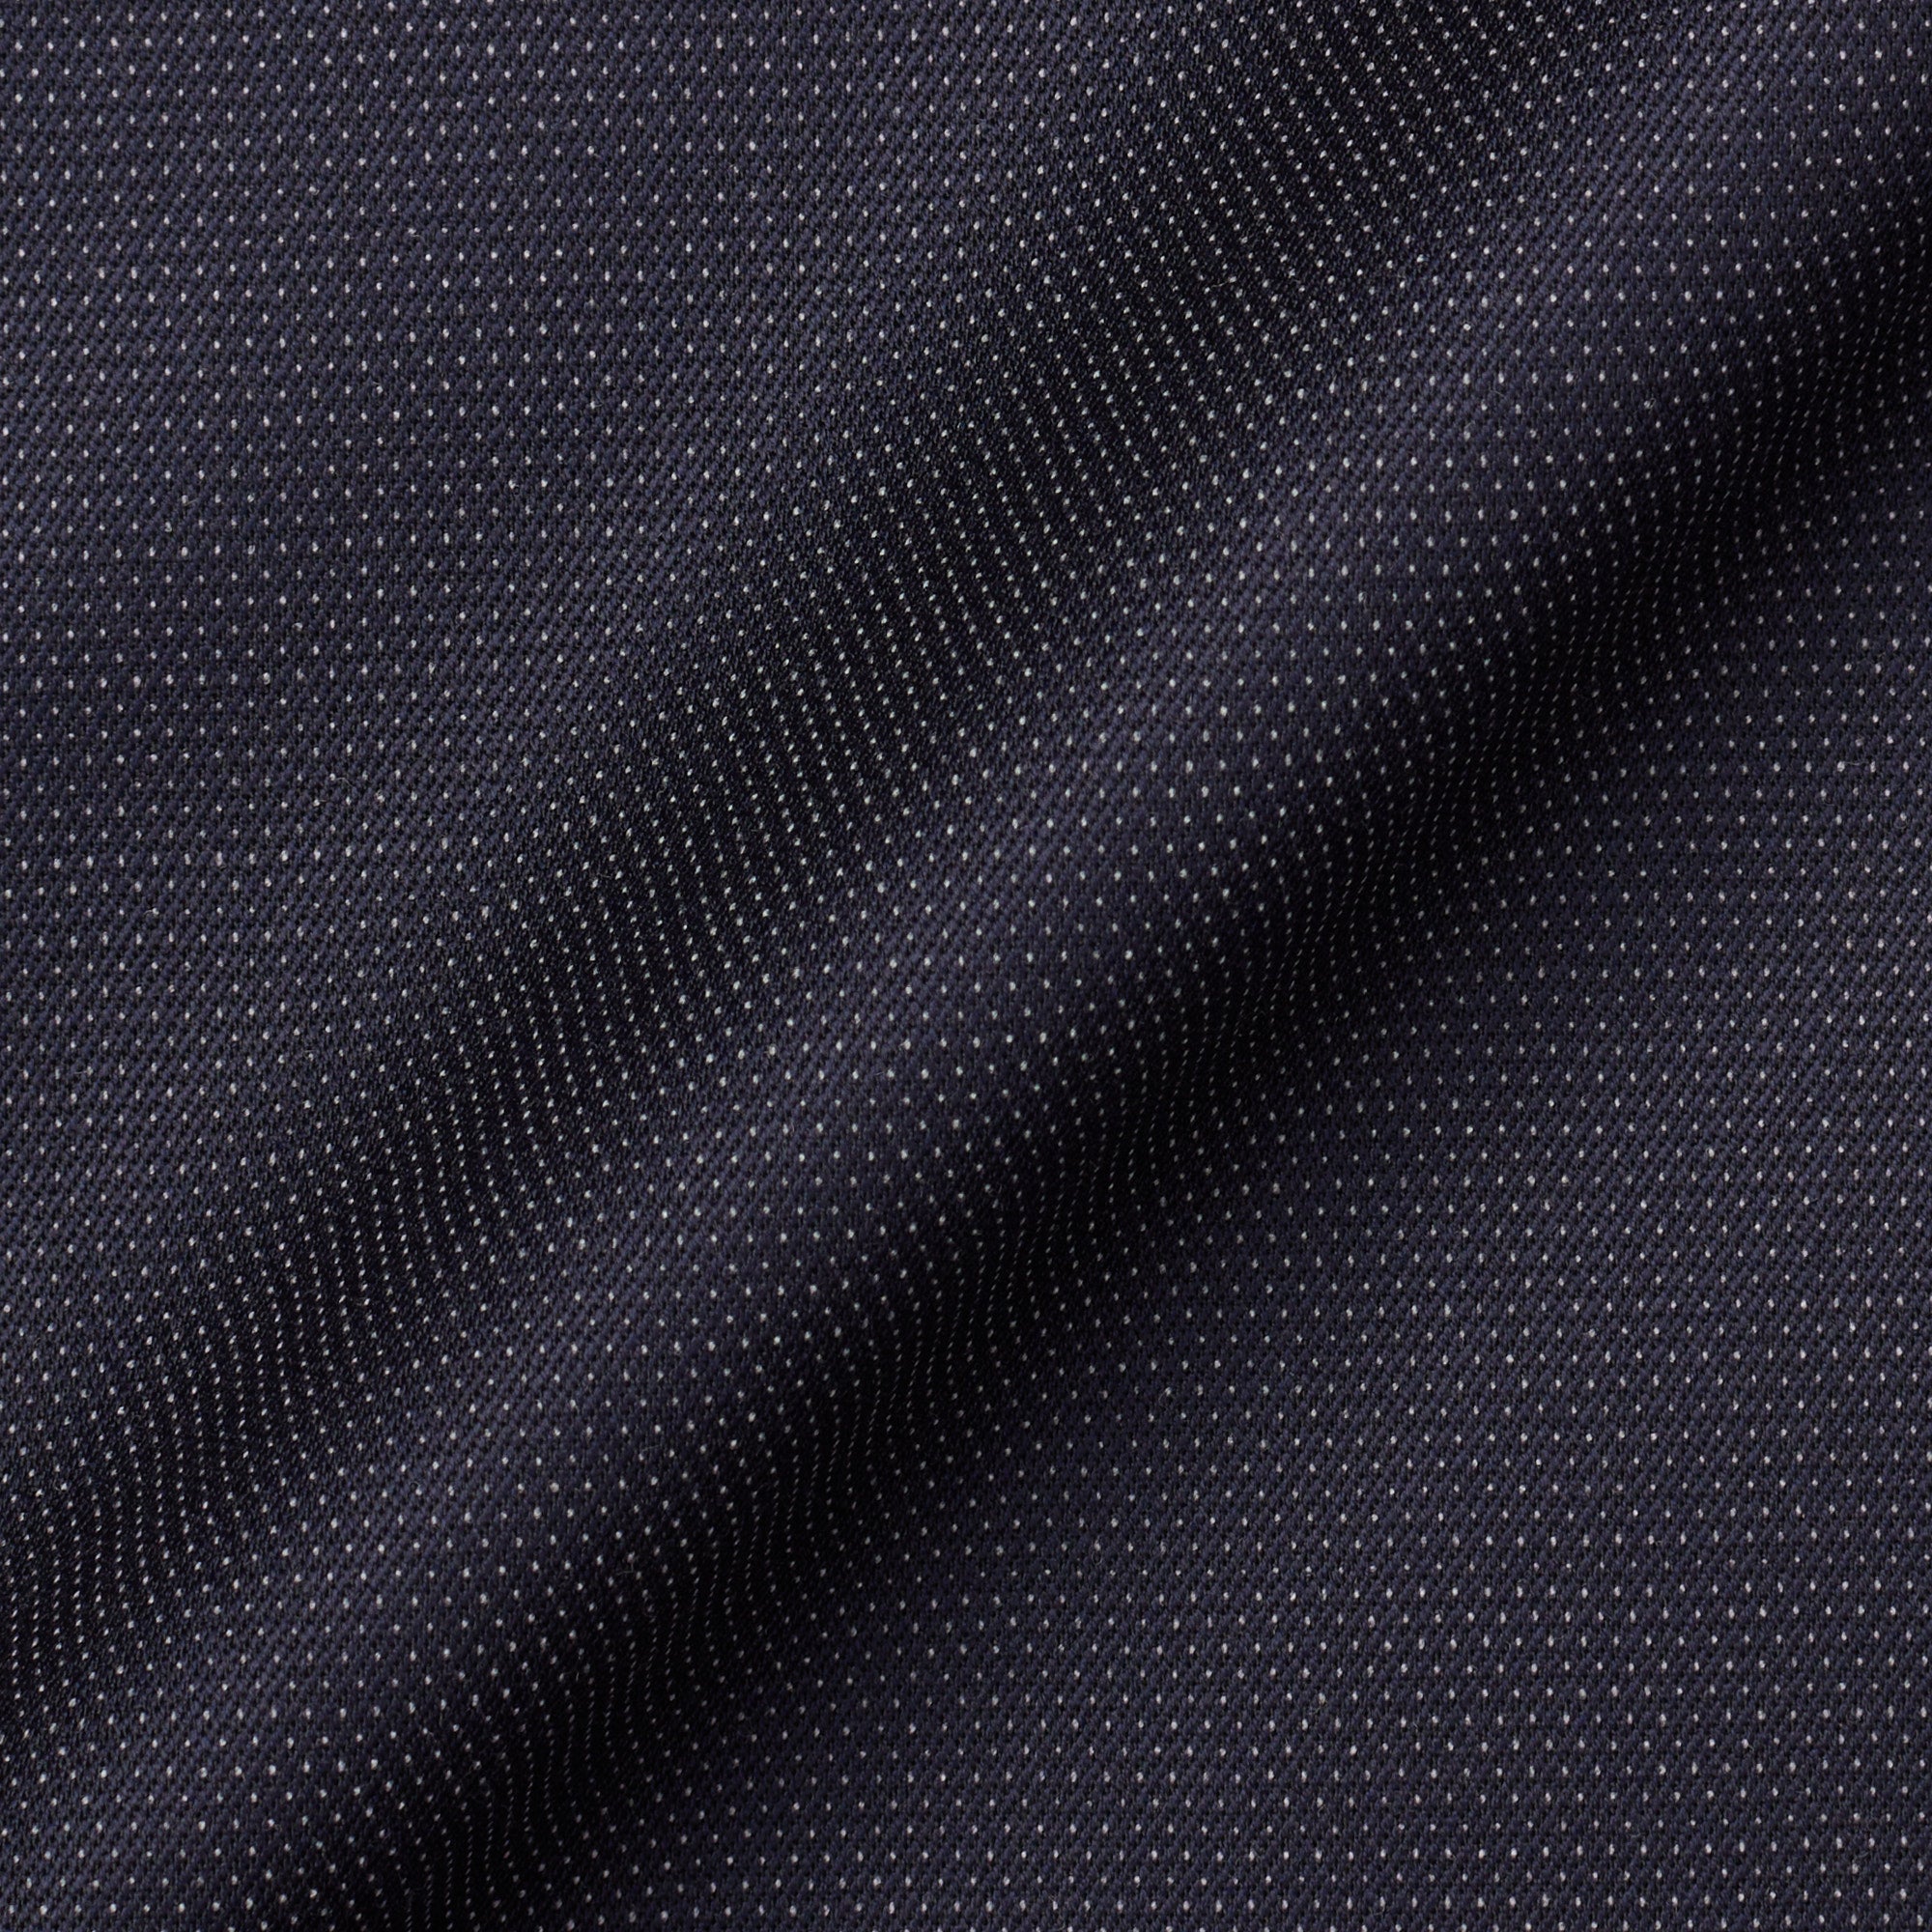 KITON Napoli Handmade Navy Blue Wool Super 180's 14 Micron Suit EU 52 NEW US 42 KITON